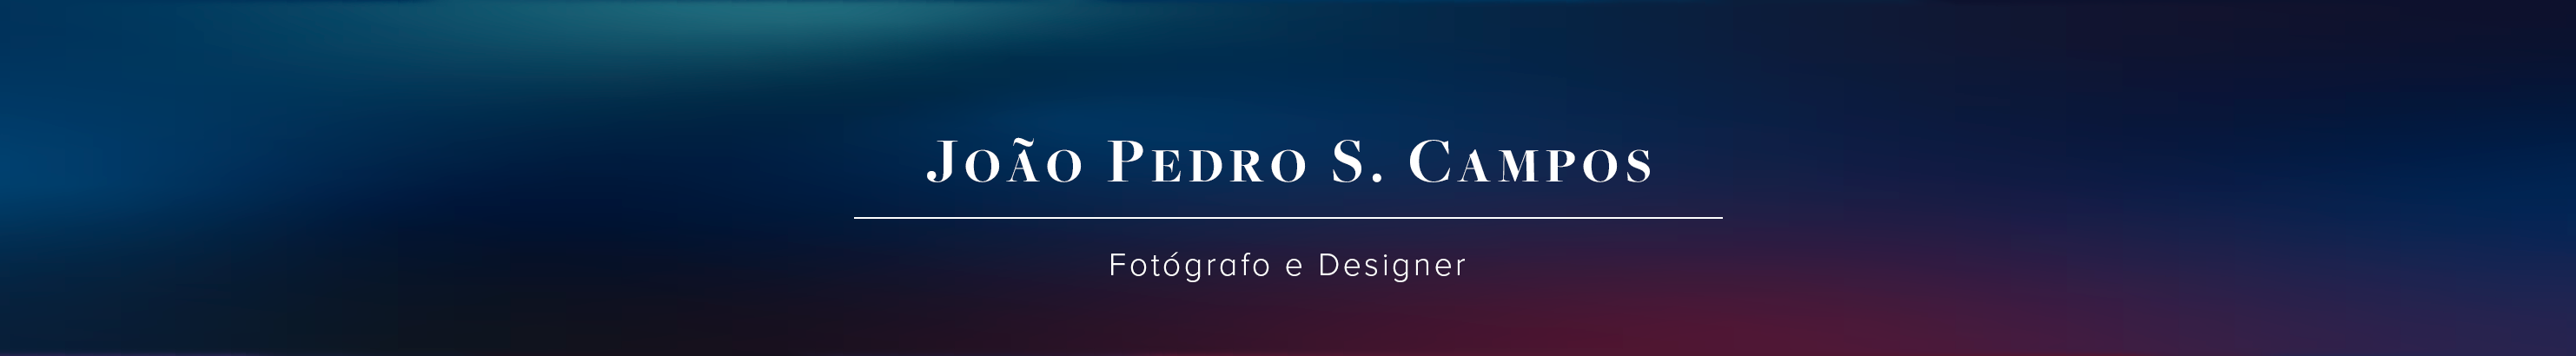 João Pedro S. Campos's profile banner